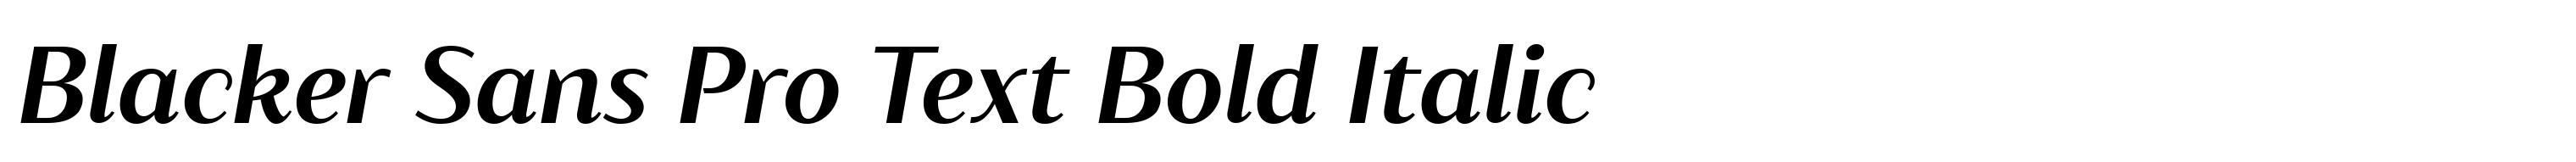 Blacker Sans Pro Text Bold Italic